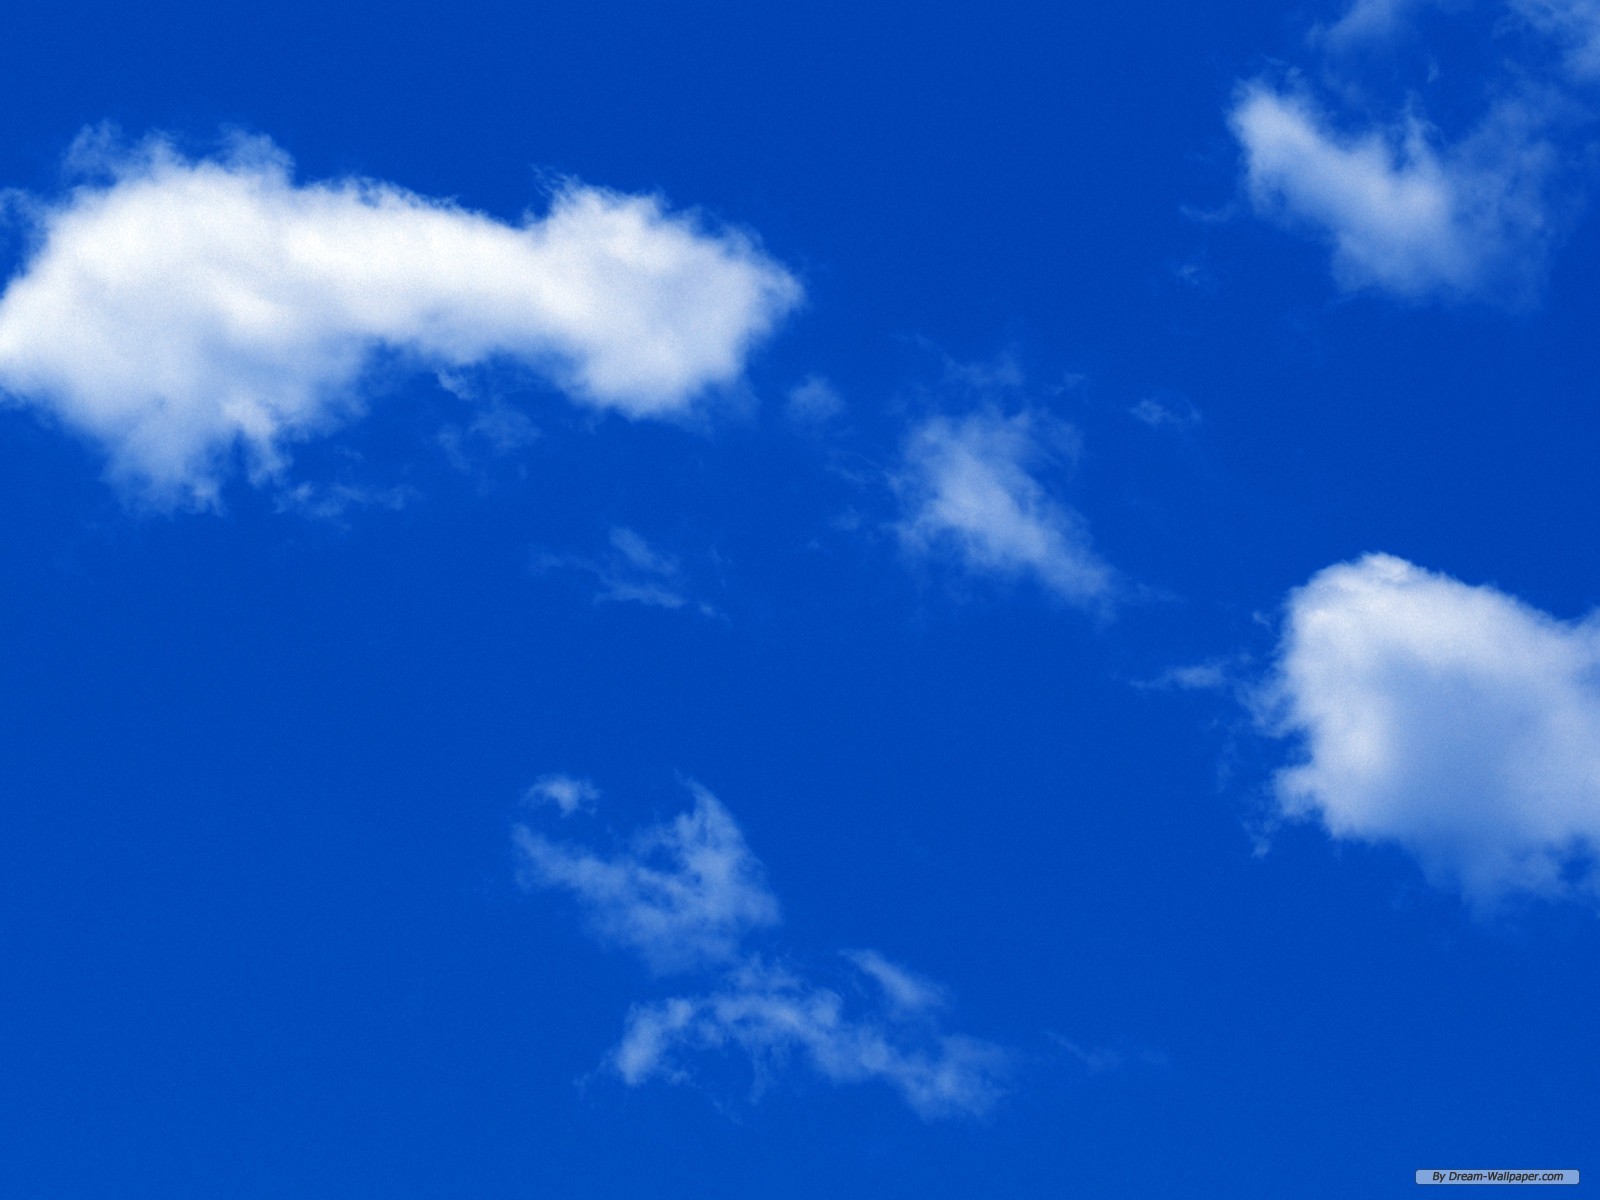  wallpaper   Blue Sky And White Cloud 8 wallpaper   1600x1200 wallpaper 1600x1200